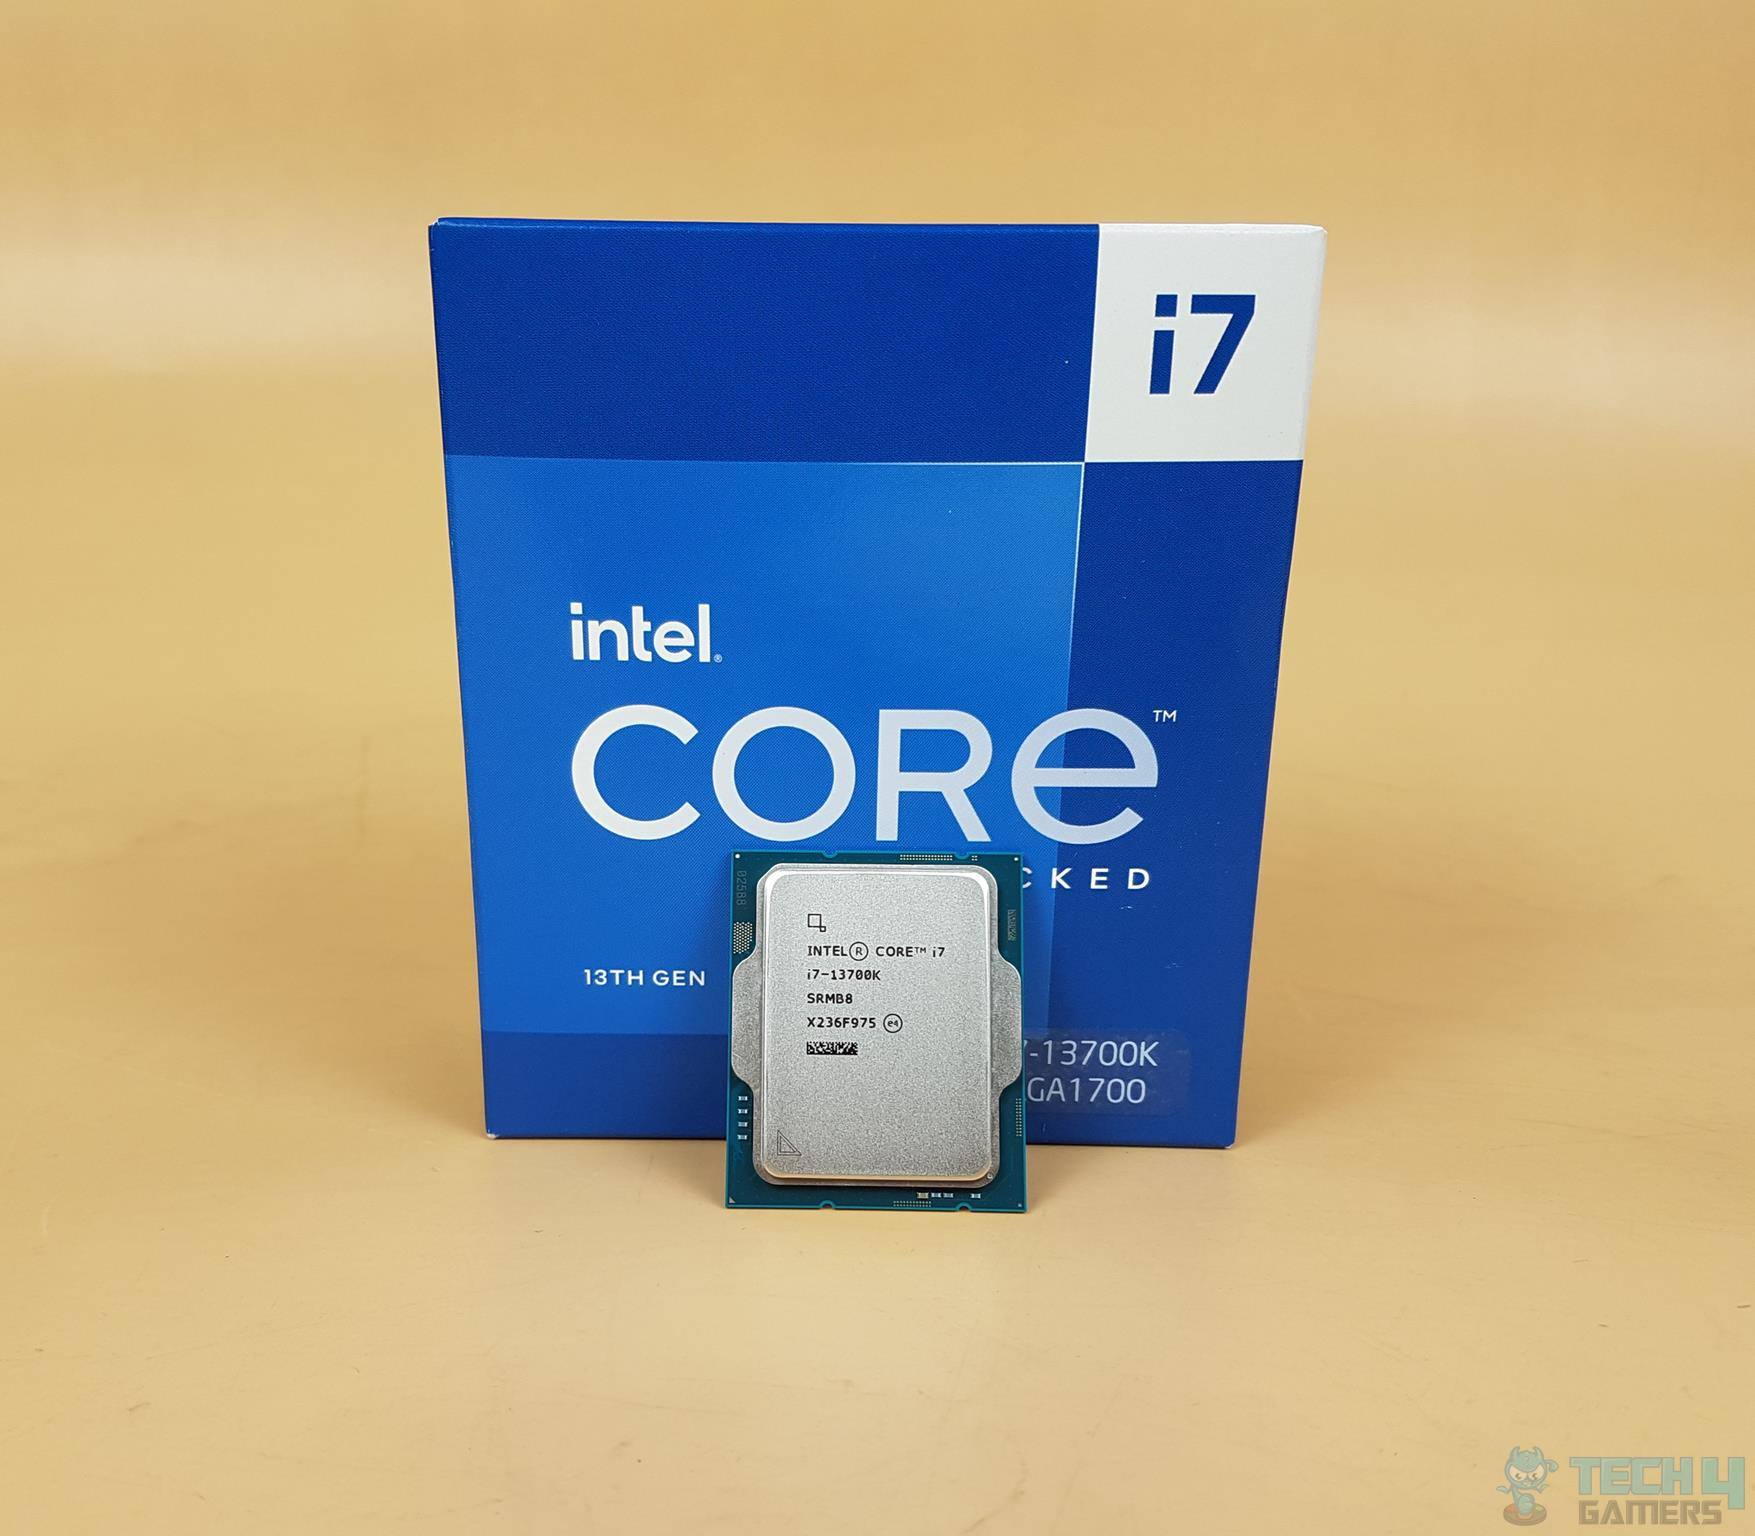 Core i7-13700K next to its box